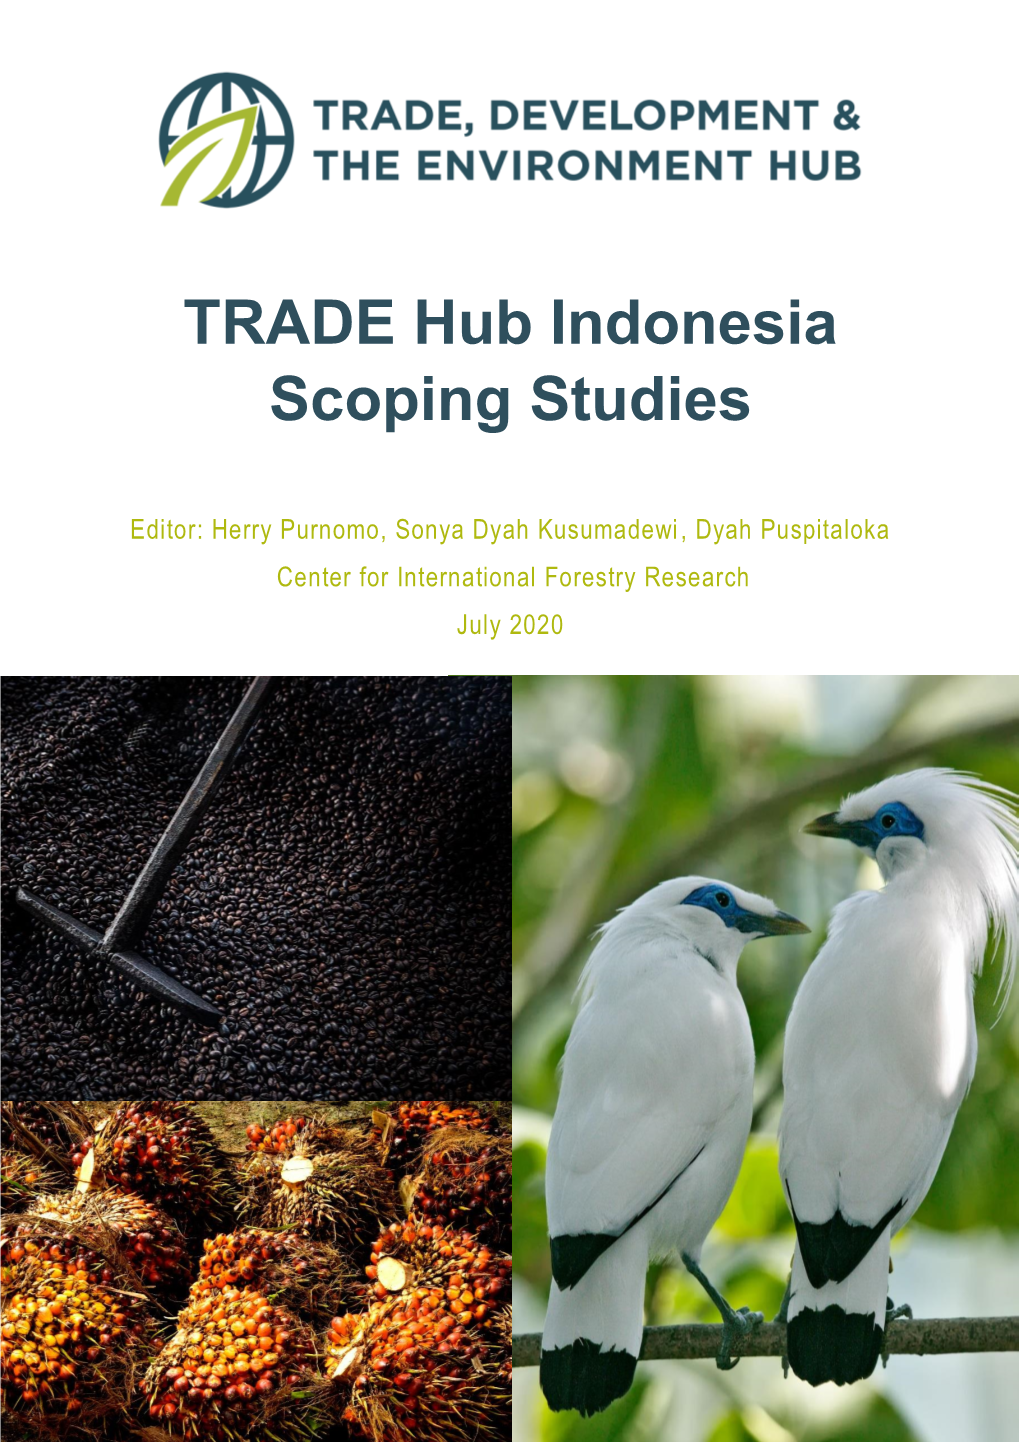 TRADE Hub Indonesia Scoping Studies